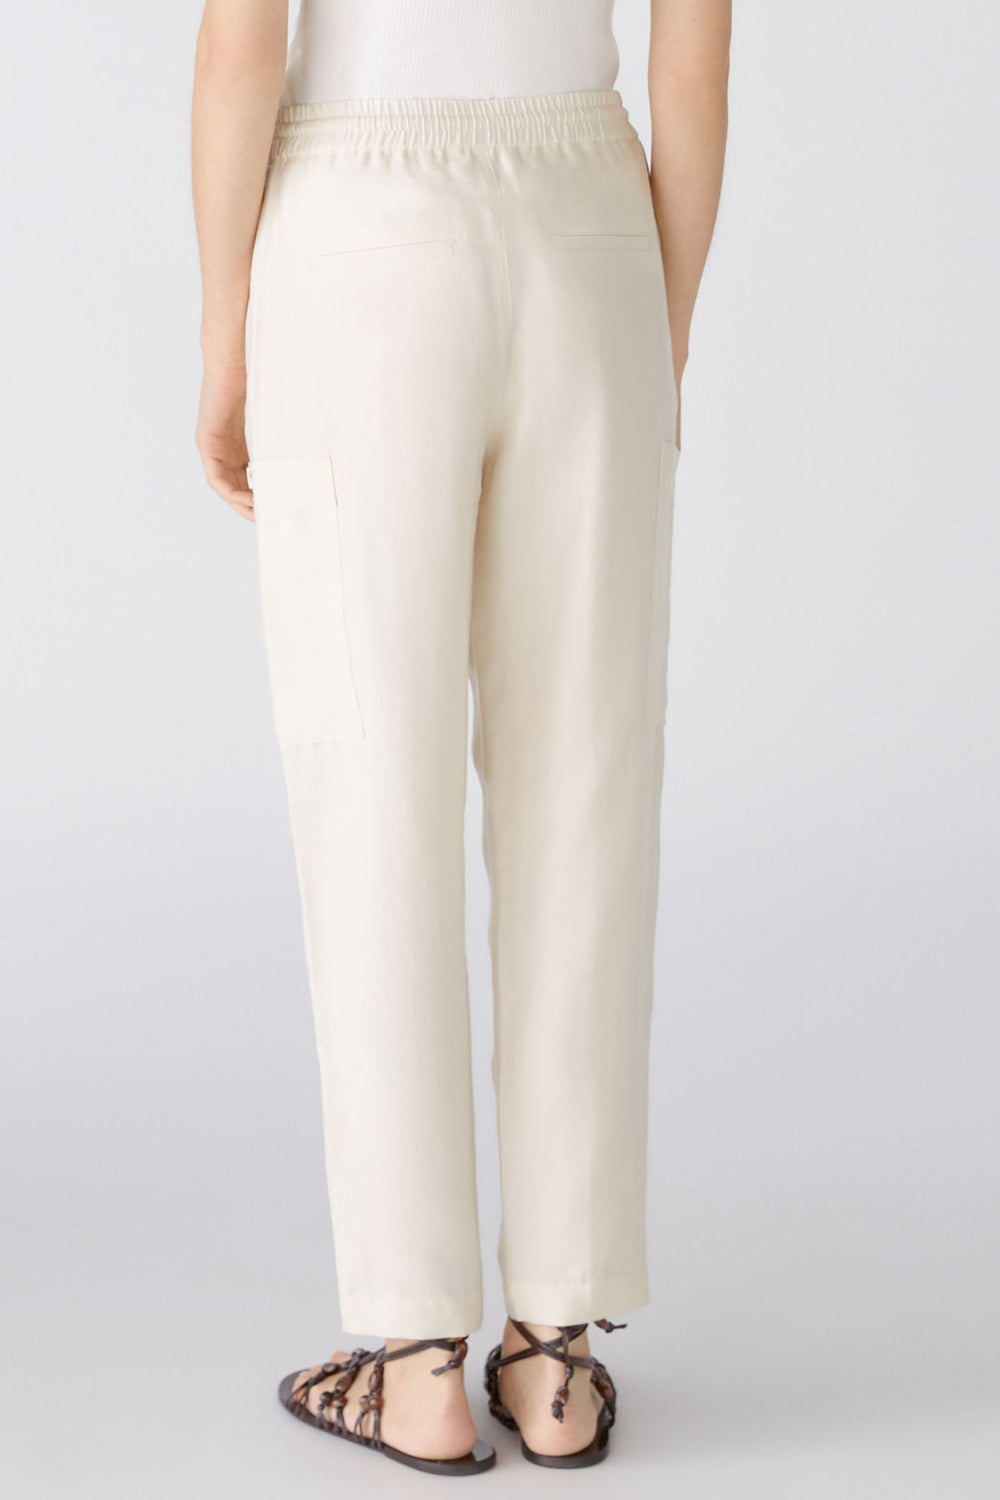 Oui 88388 Almond Milk Cream Drawstring Waist Trousers - Olivia Grace Fashion